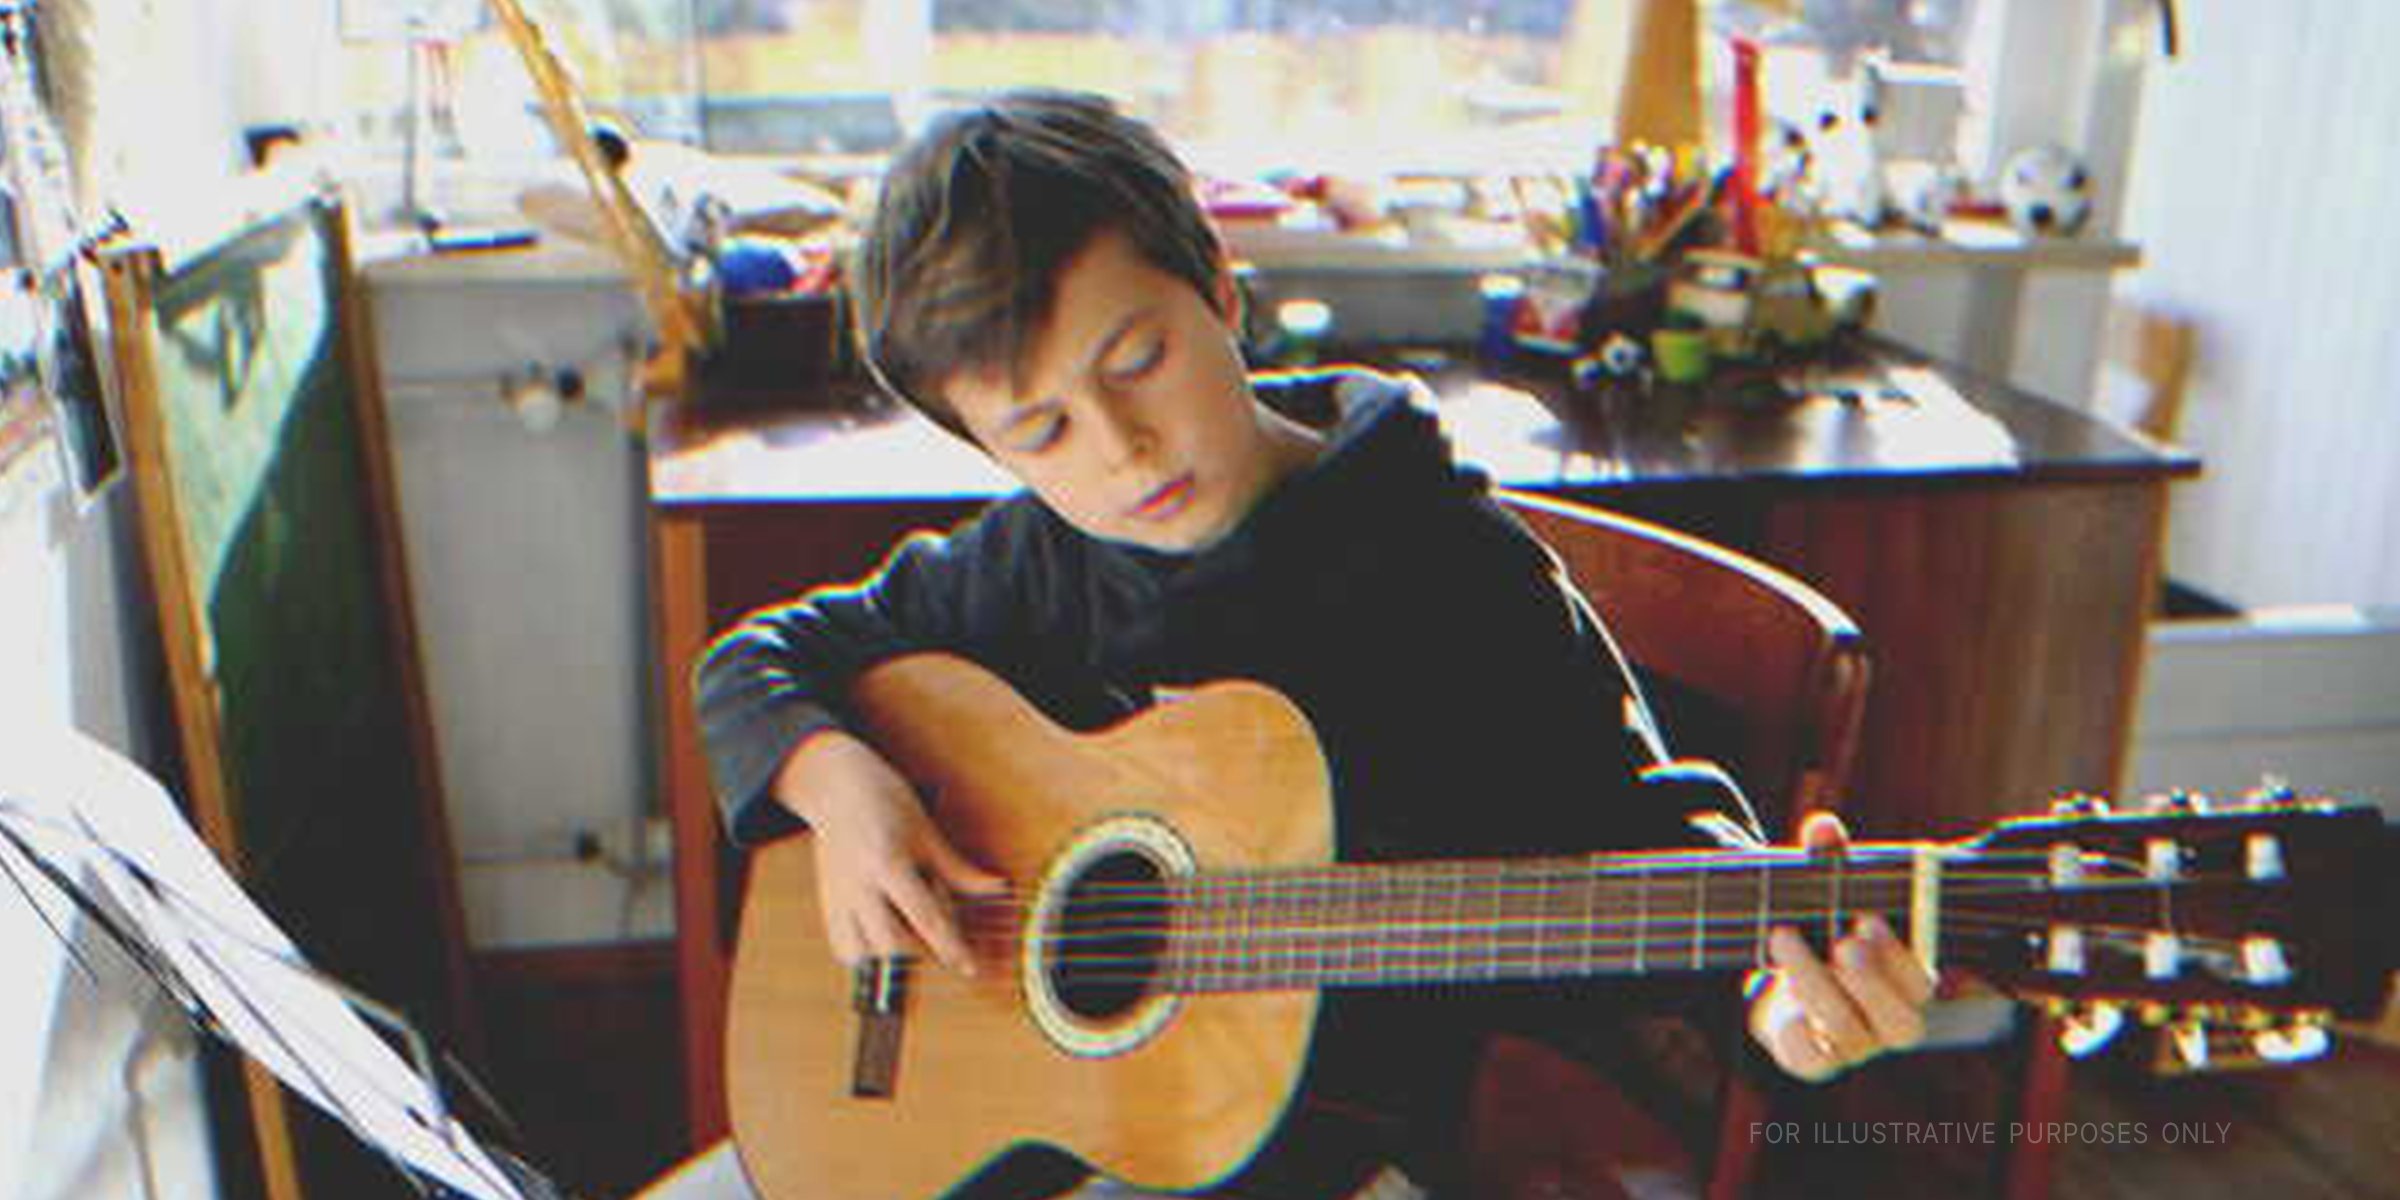 Young boy playing the guitar | Source: Shutterstock